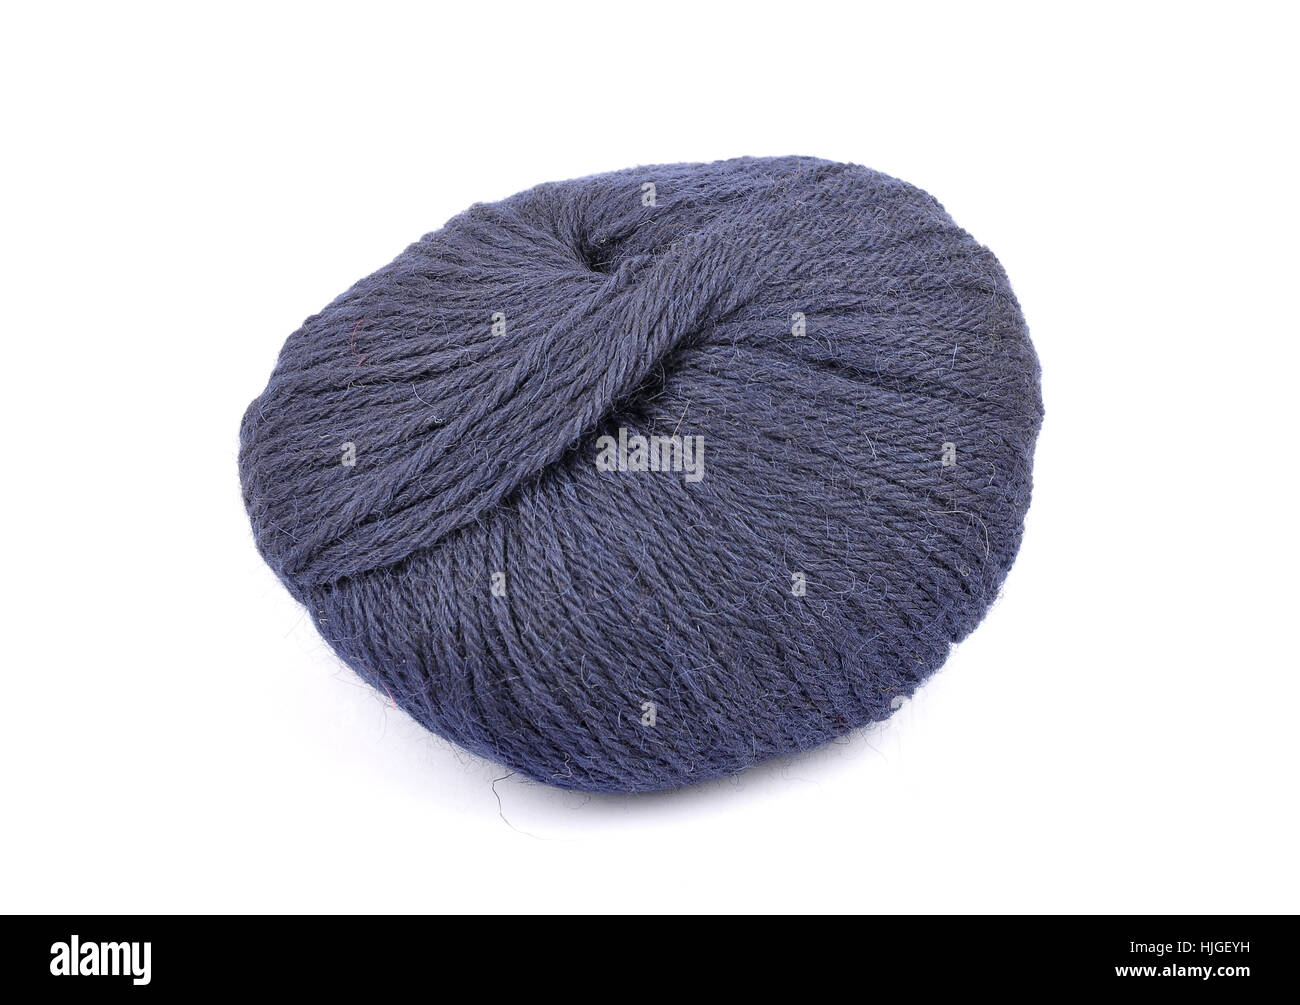 blue, optional, wool, knit, handicraft, yarn, ball of wool, grey, gray, apart, Stock Photo